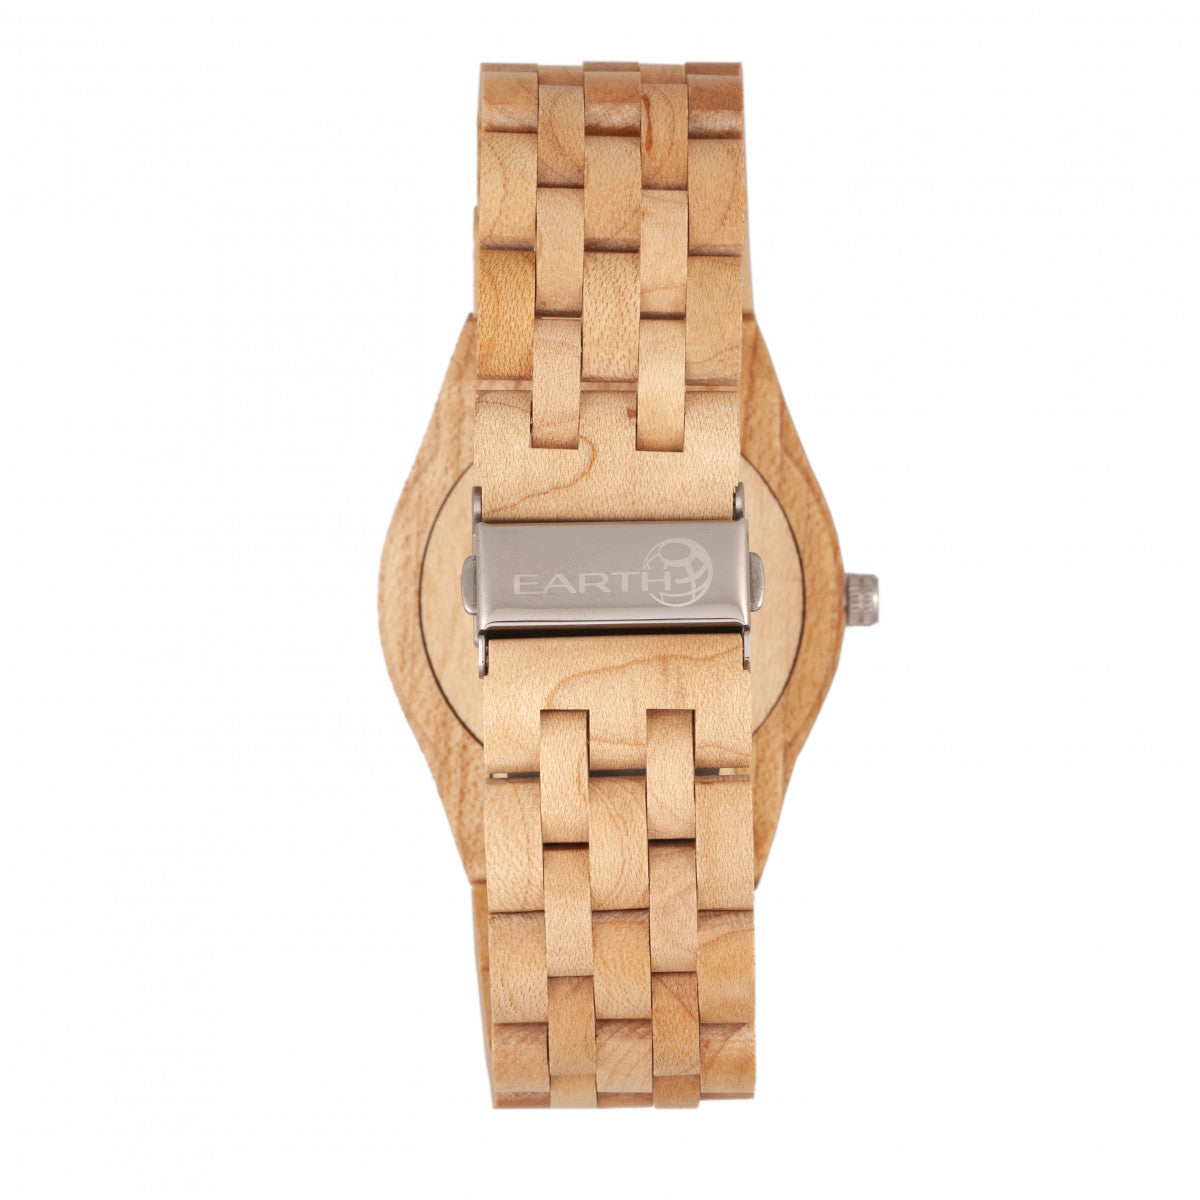 Earth Wood Baobab Bracelet Watch w/Date - Khaki/Tan - ETHEW5501